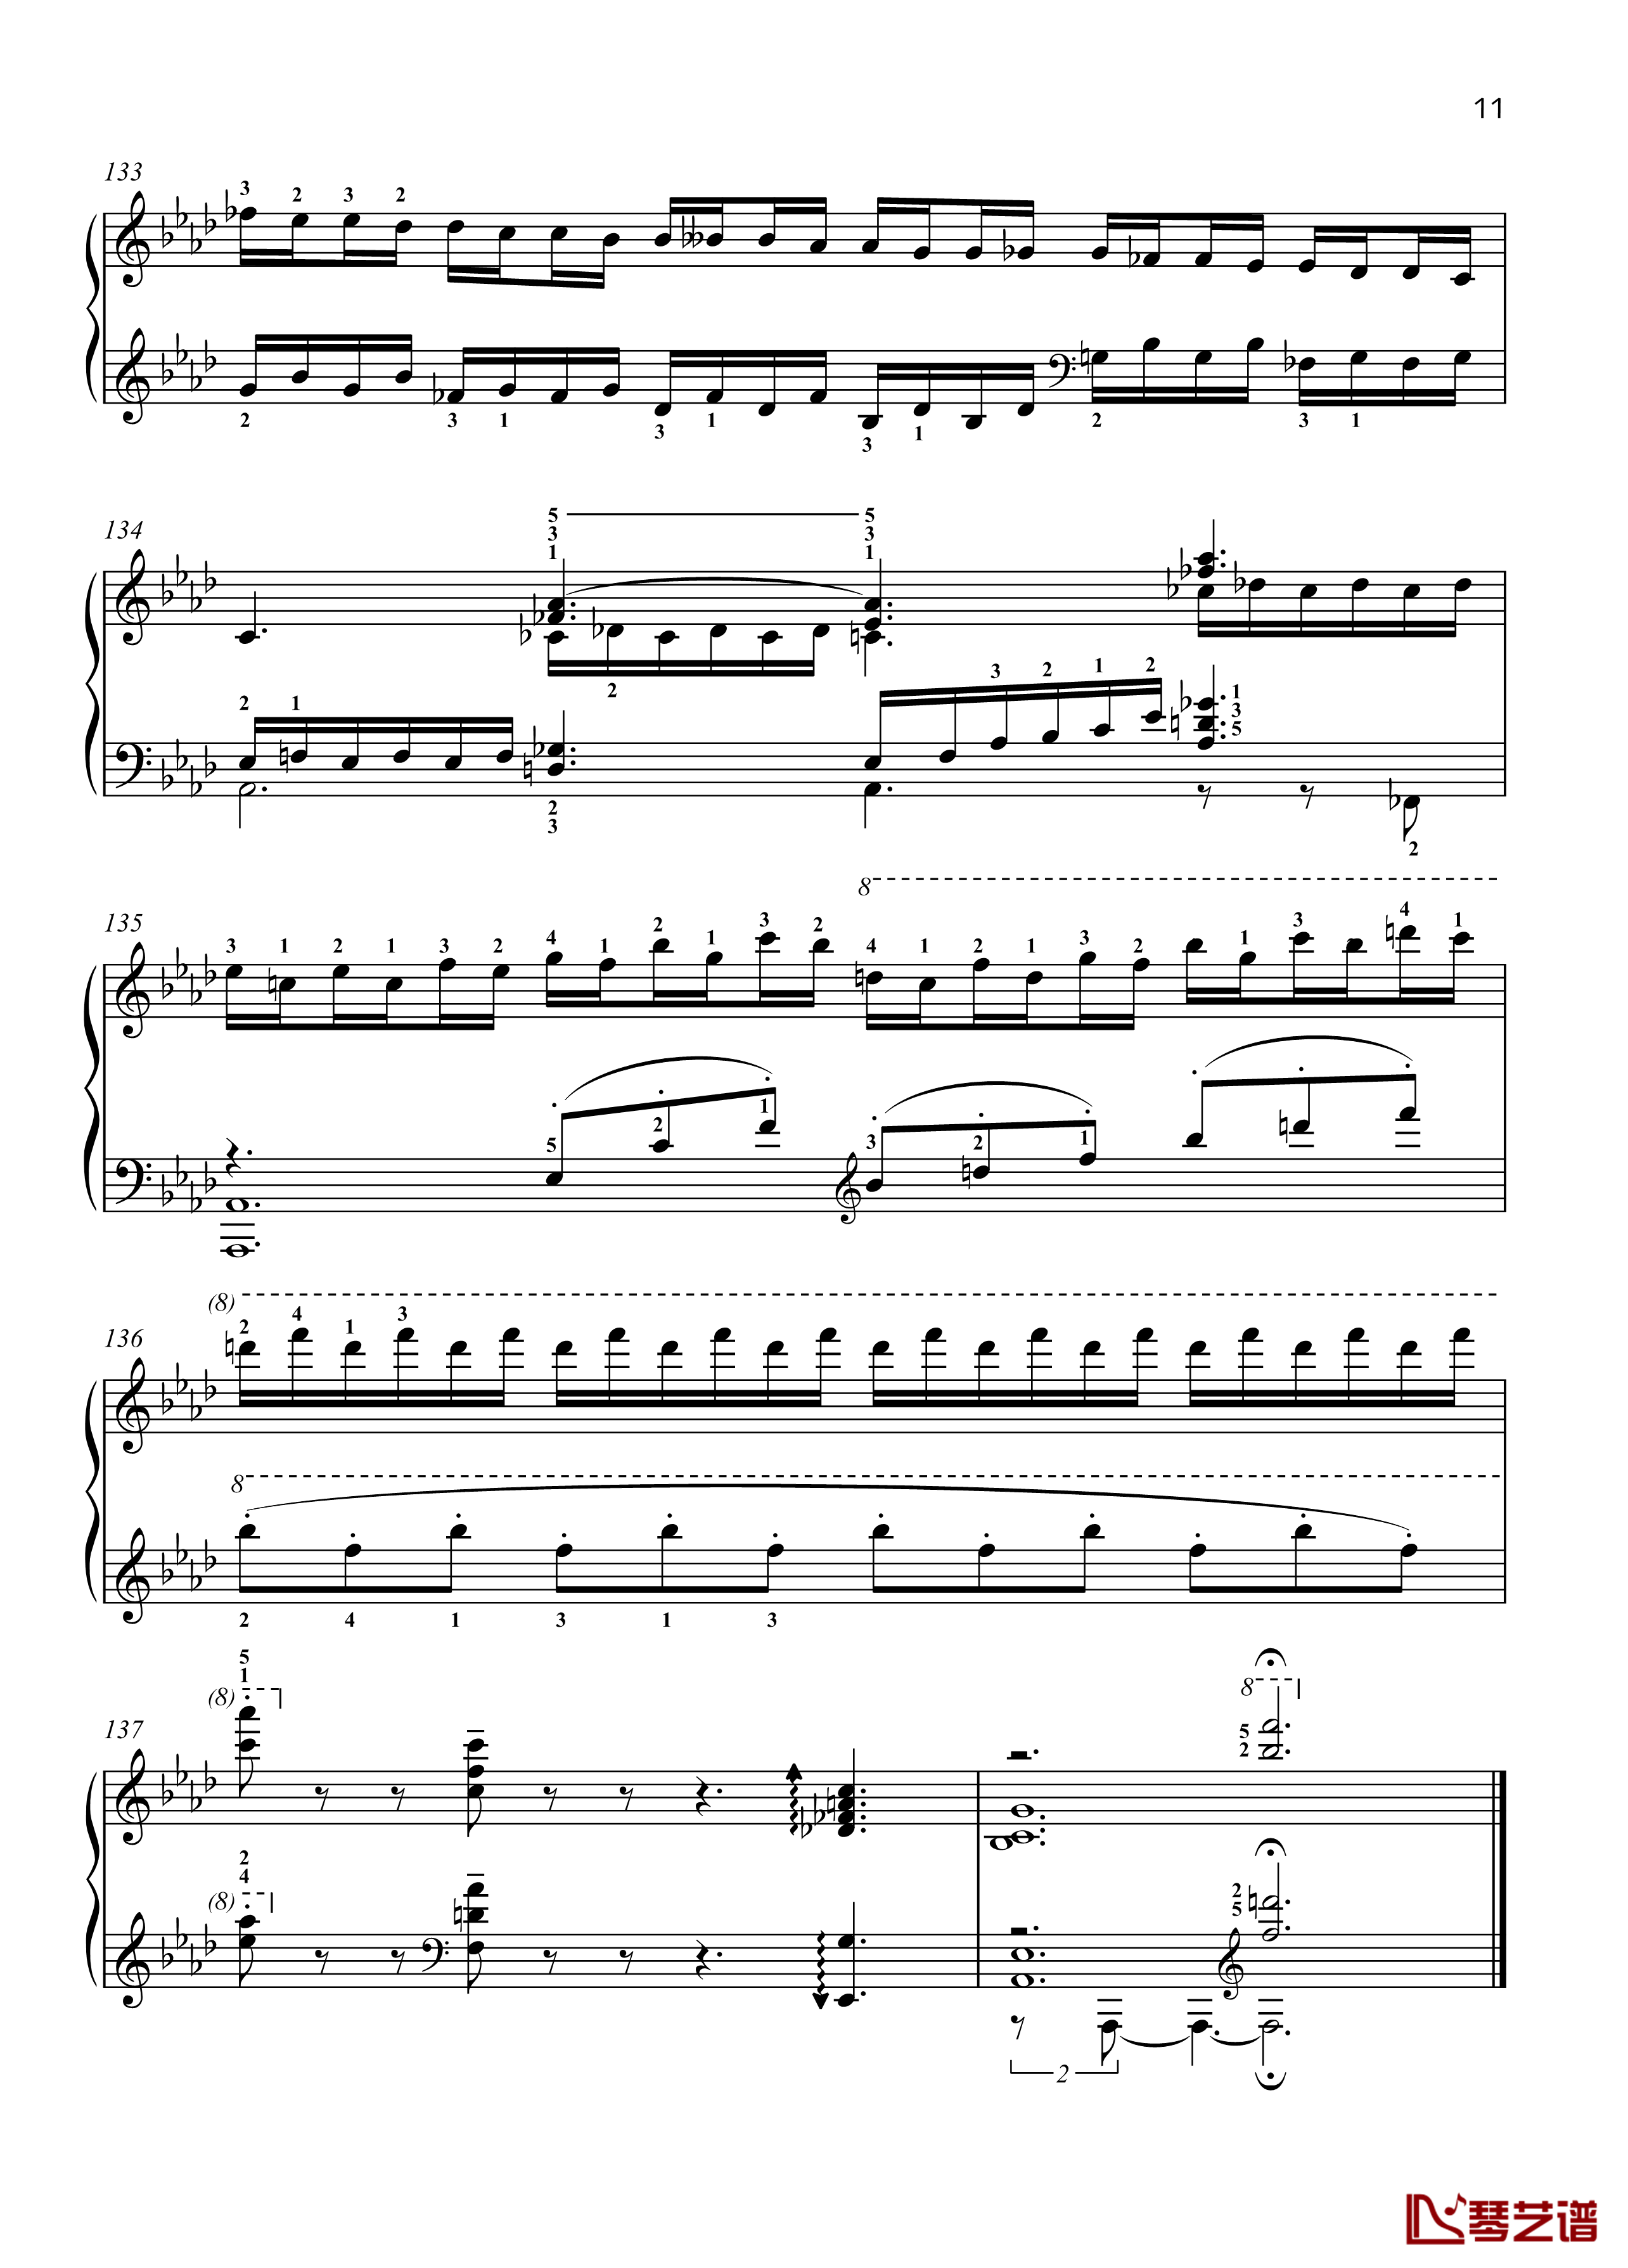 No. 2. Dream. Moderato钢琴谱-带指法- 八首音乐会练习曲 Eight Concert ?tudes Op 40 -爵士-尼古拉·凯帕斯汀11